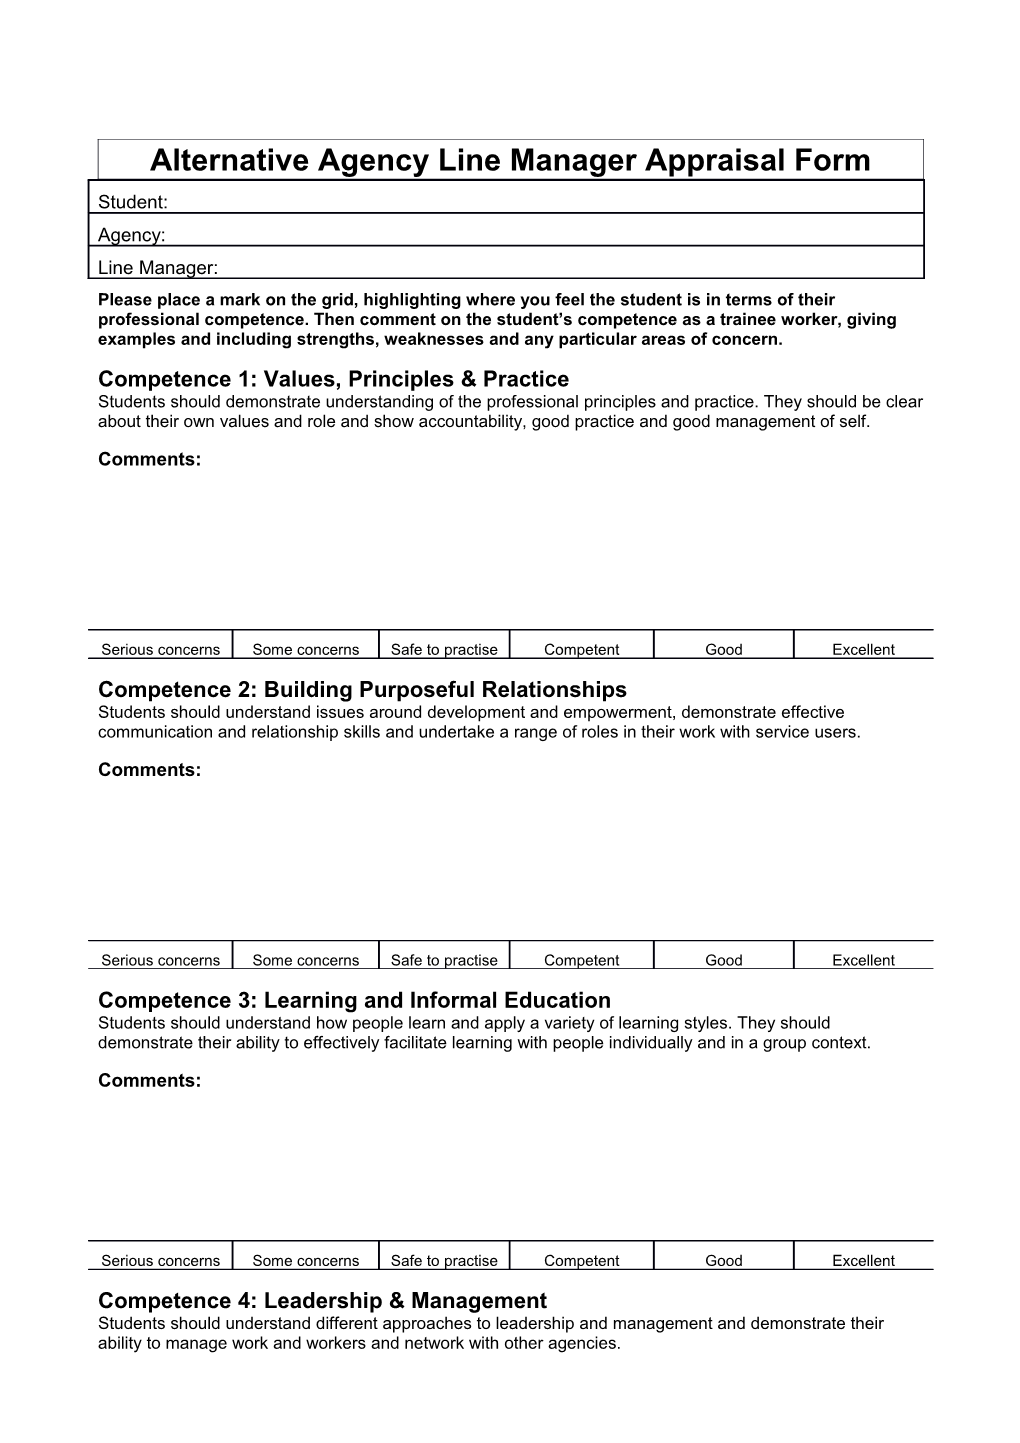 Alternative Agency Line Manager Appraisal Form